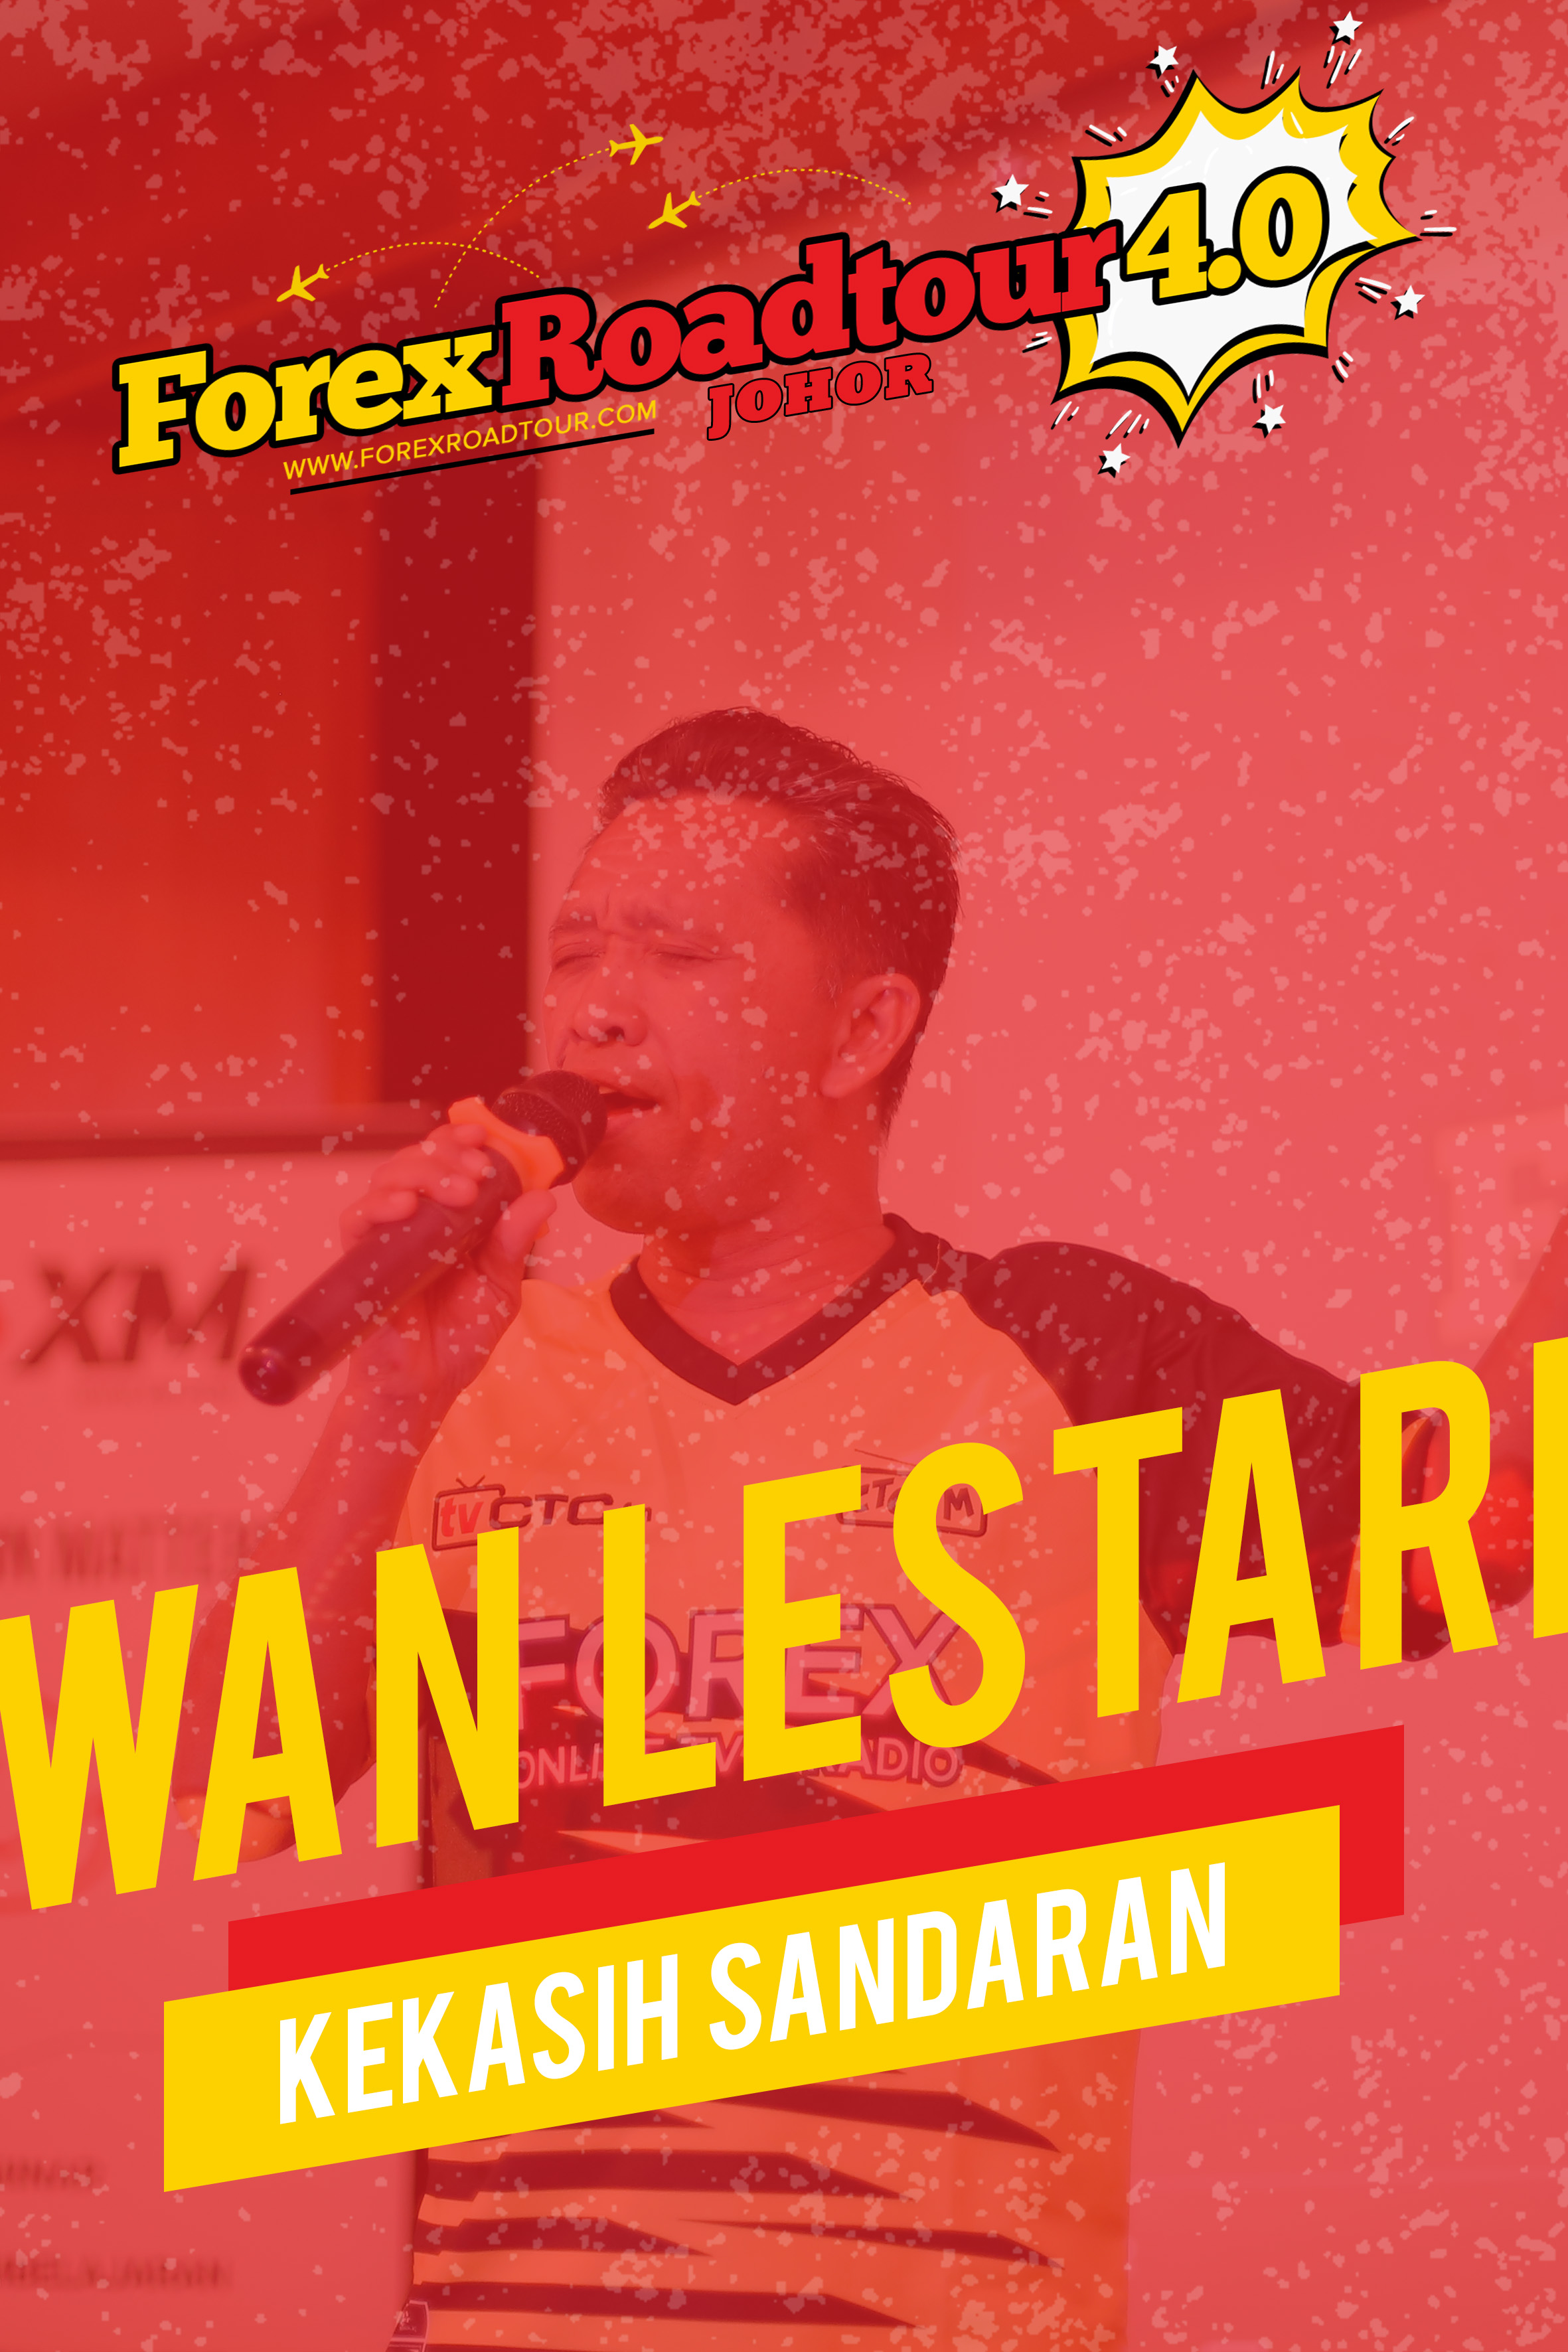 Wan Lestari - Kekasih Sandaran [Forex Roadtour 4.0 Johor]